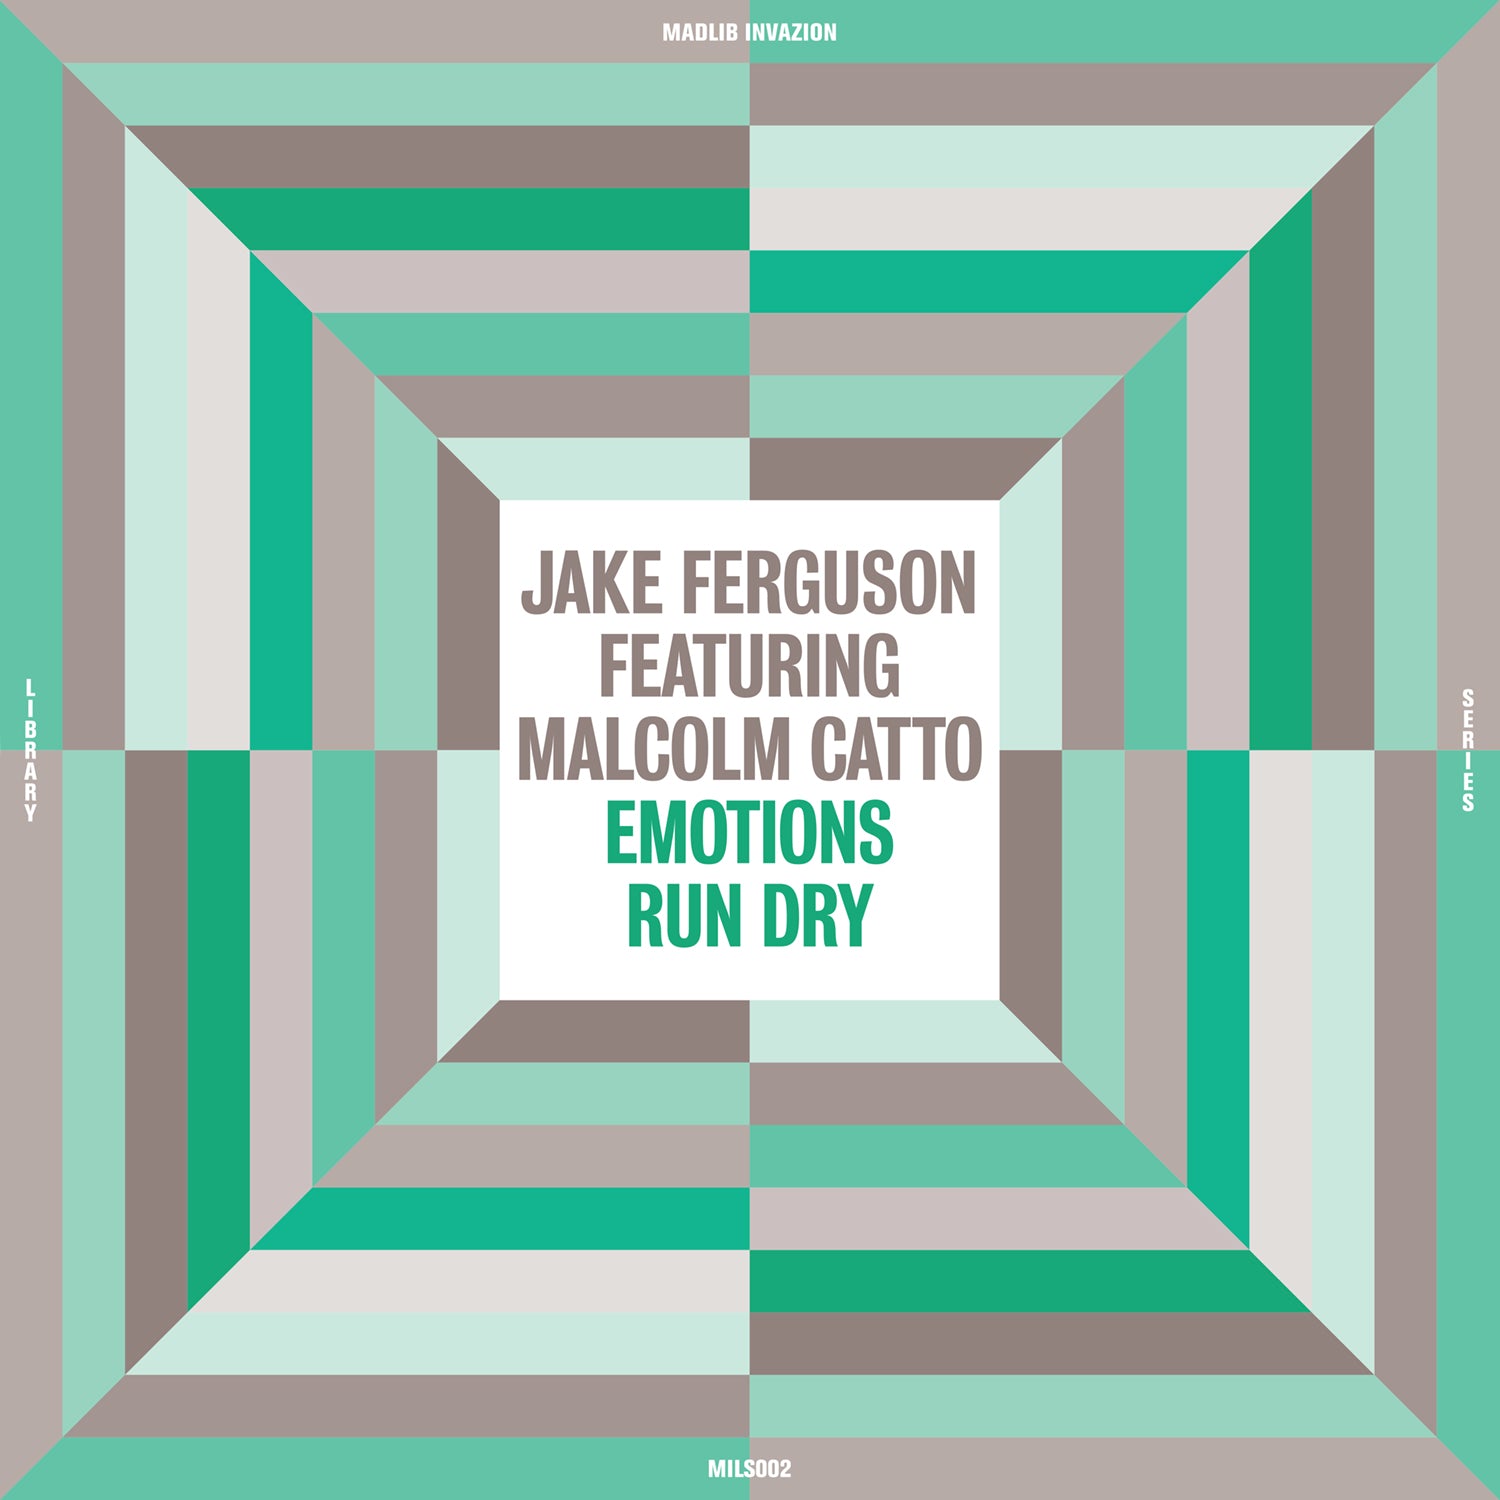 Jake Ferguson featuring Malcolm Catto - Emotions Run Dry (Madlib Invazion Music Library Series #2)